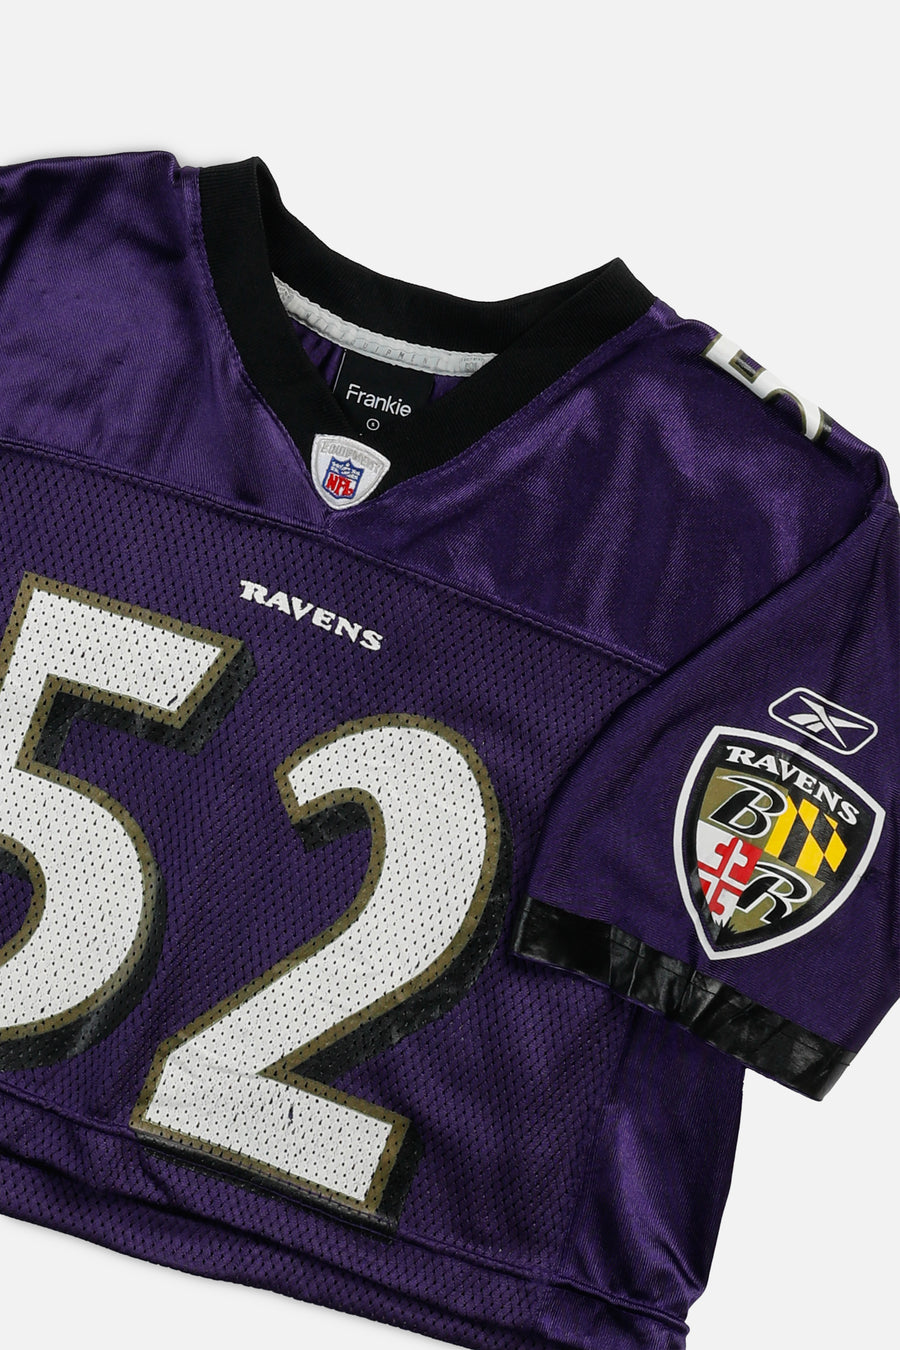 Rework Baltimore Ravens Crop NFL Jersey - S